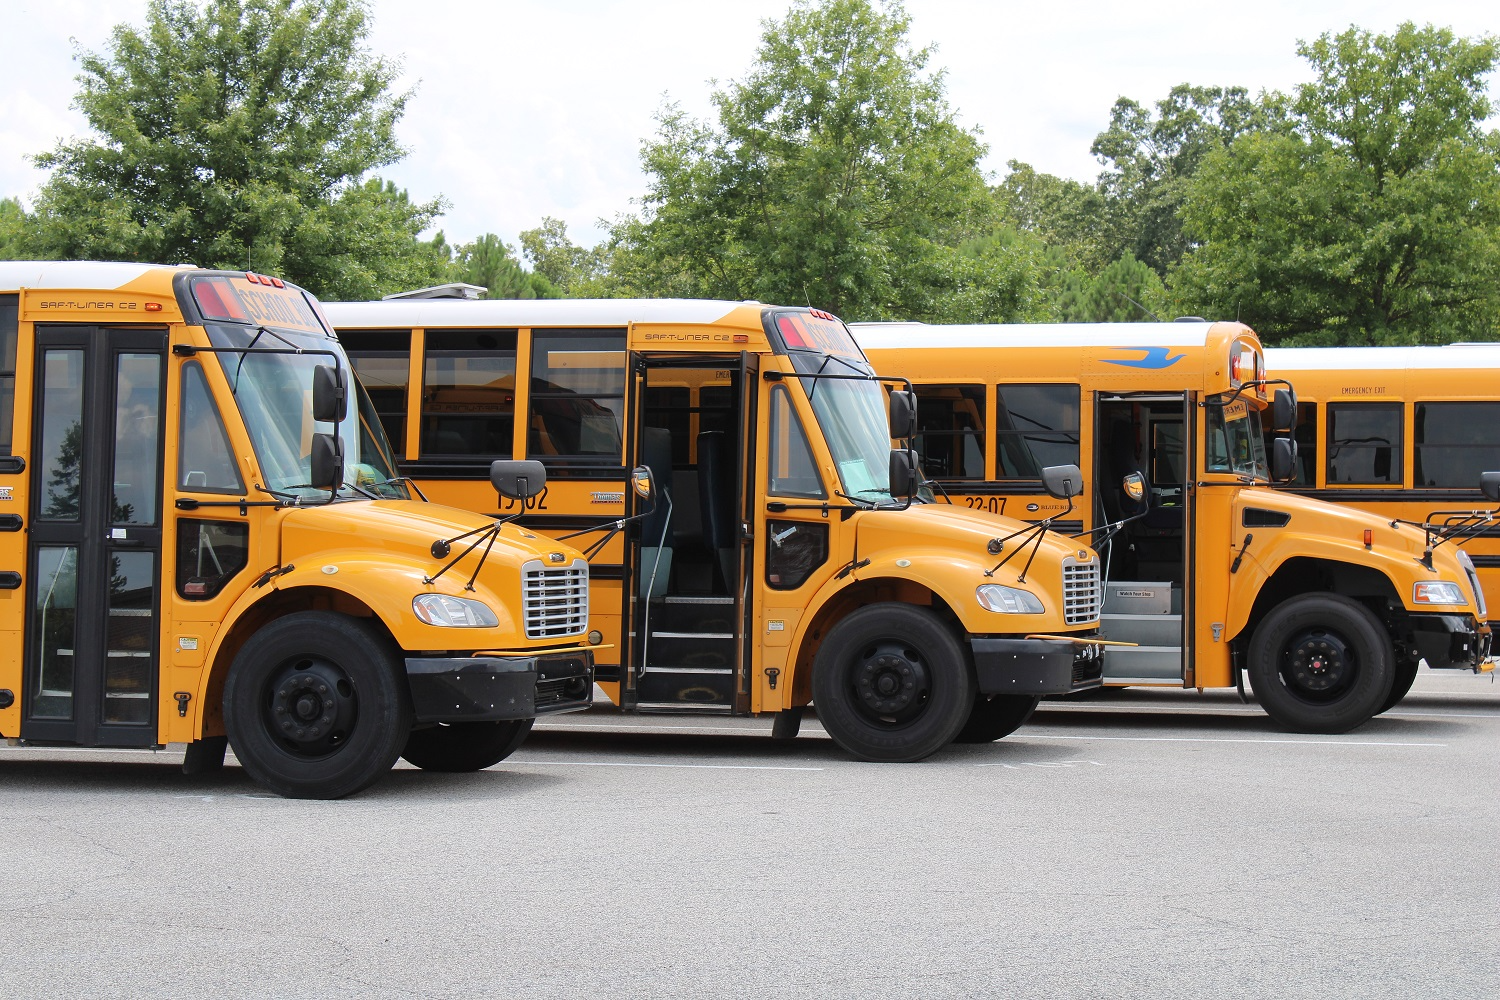 School busese in parking lot